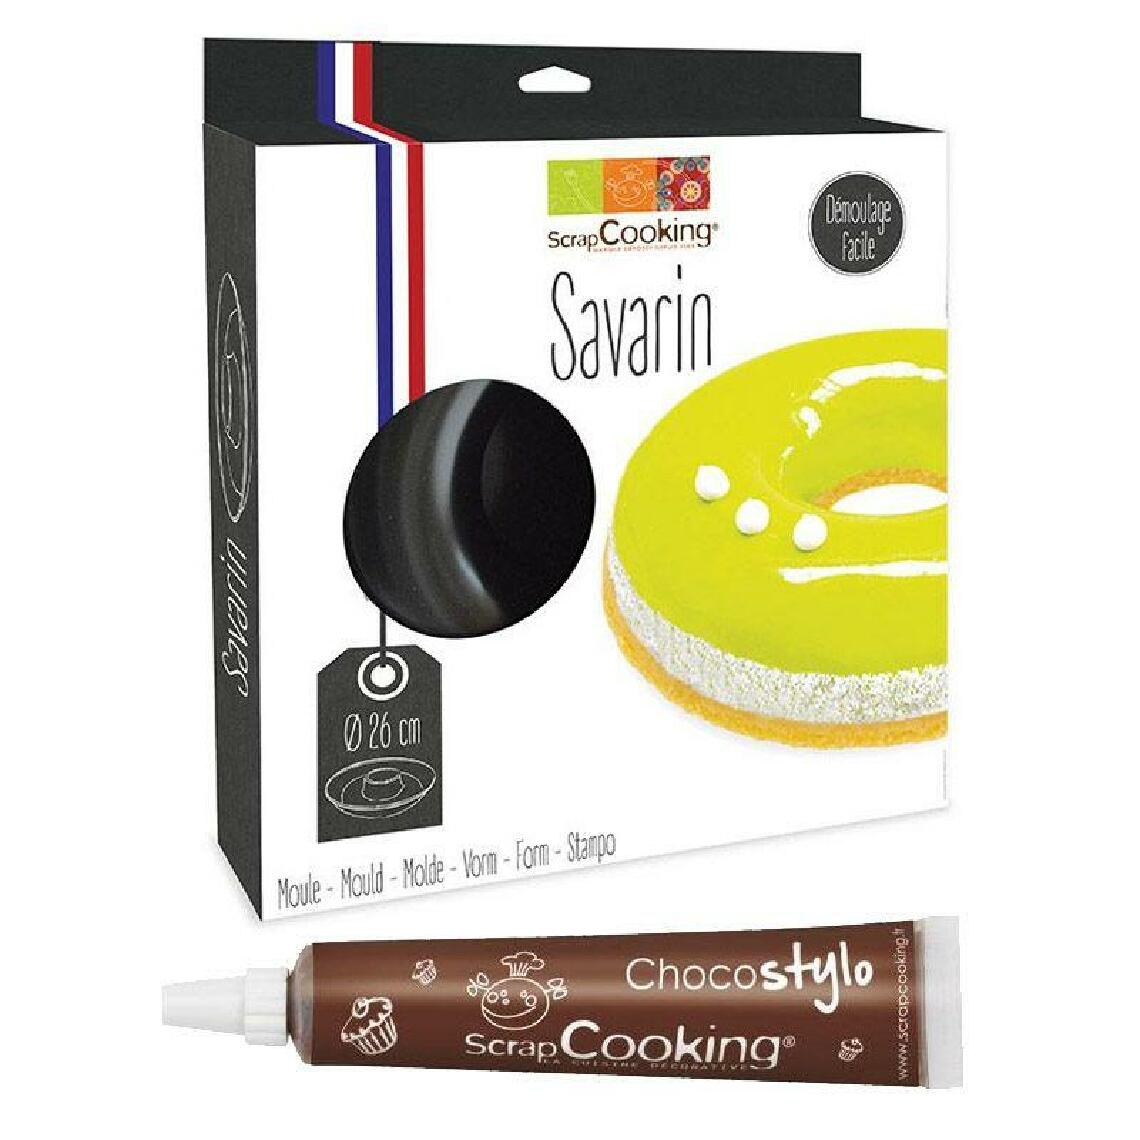 Scrapcooking - Moule à gâteau semi-rigide savarin + 1 Stylo chocolat offert - Kits créatifs